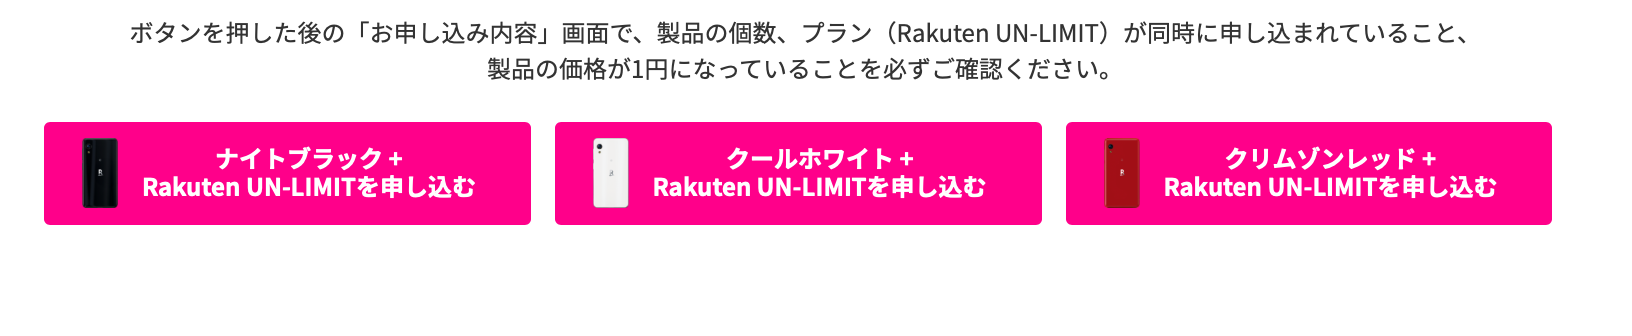 Rakuten mini最新キャンペーンサイト